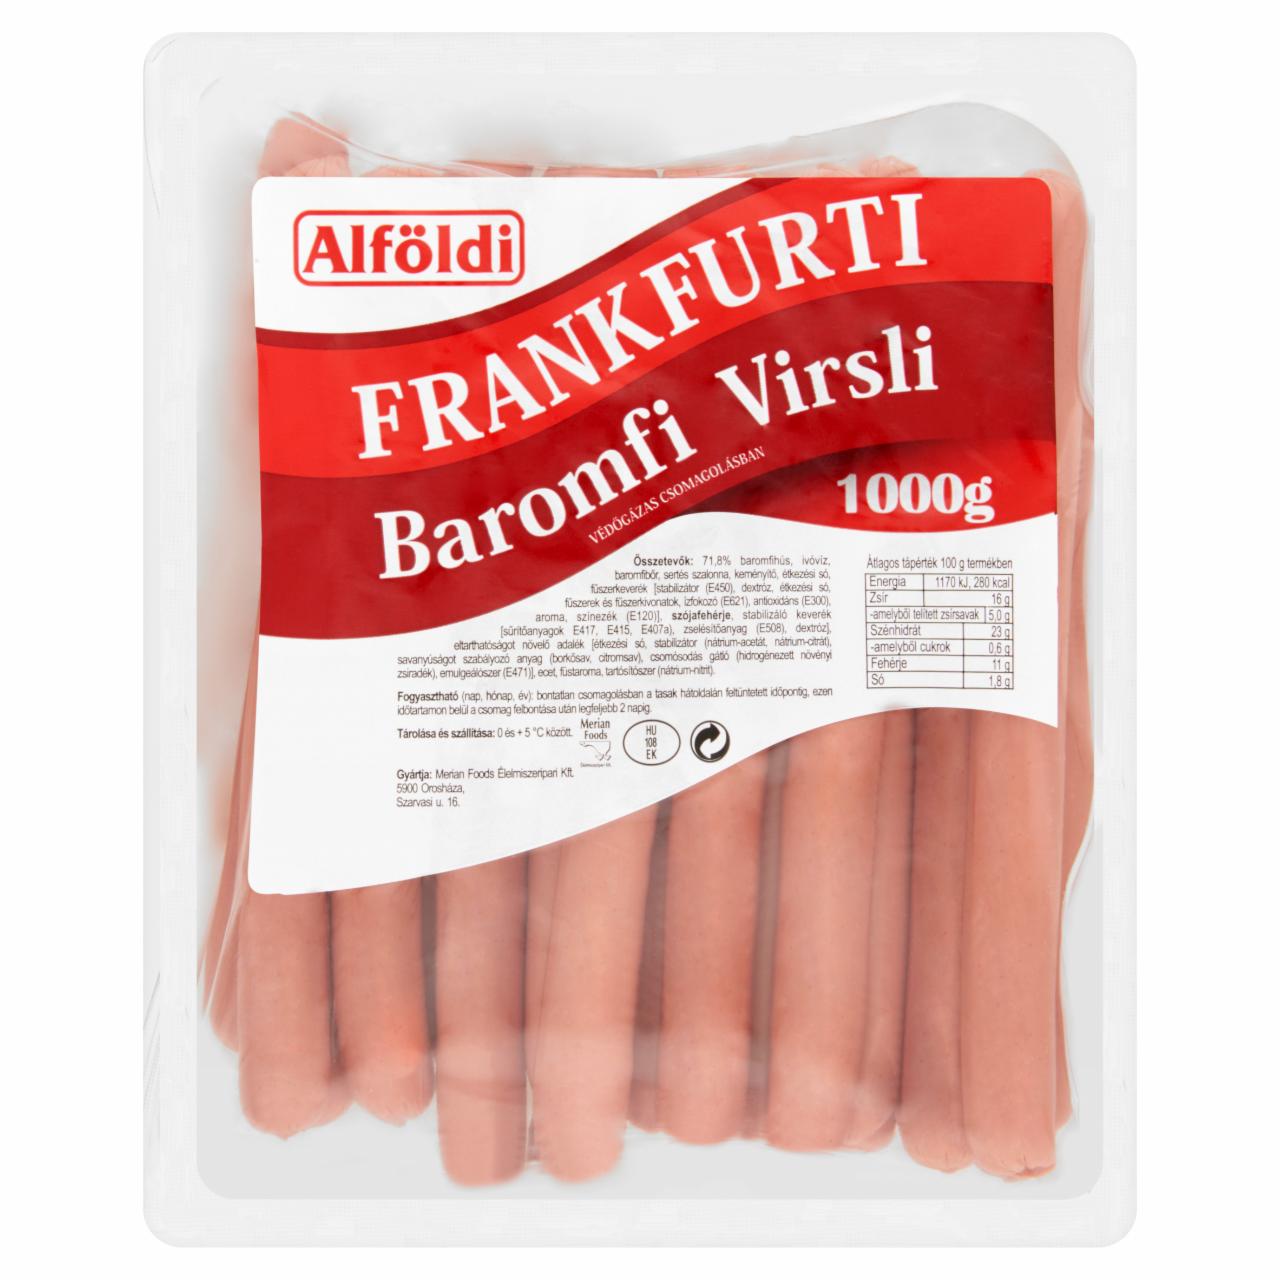 Képek - Alföldi frankfurti baromfi virsli 1000 g